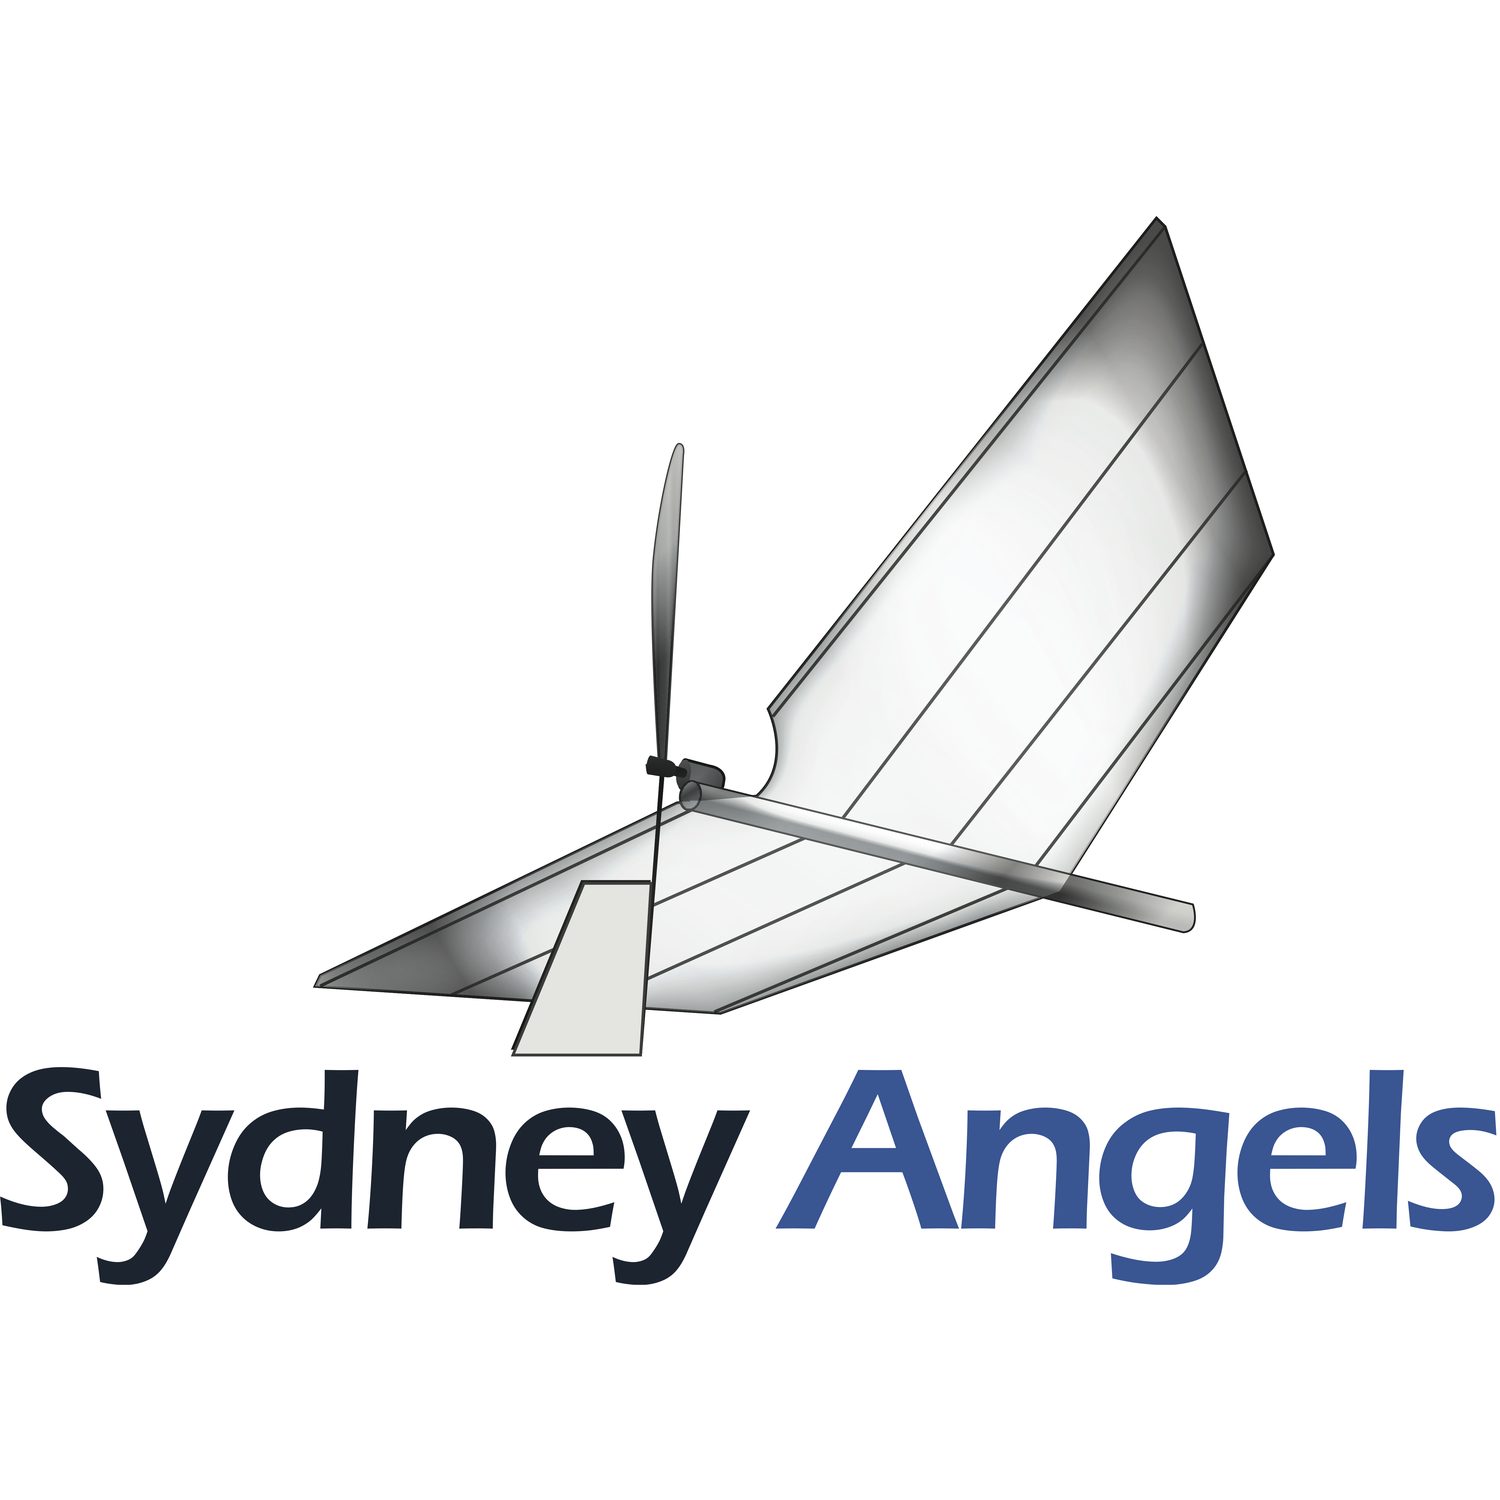 Sydney Angels